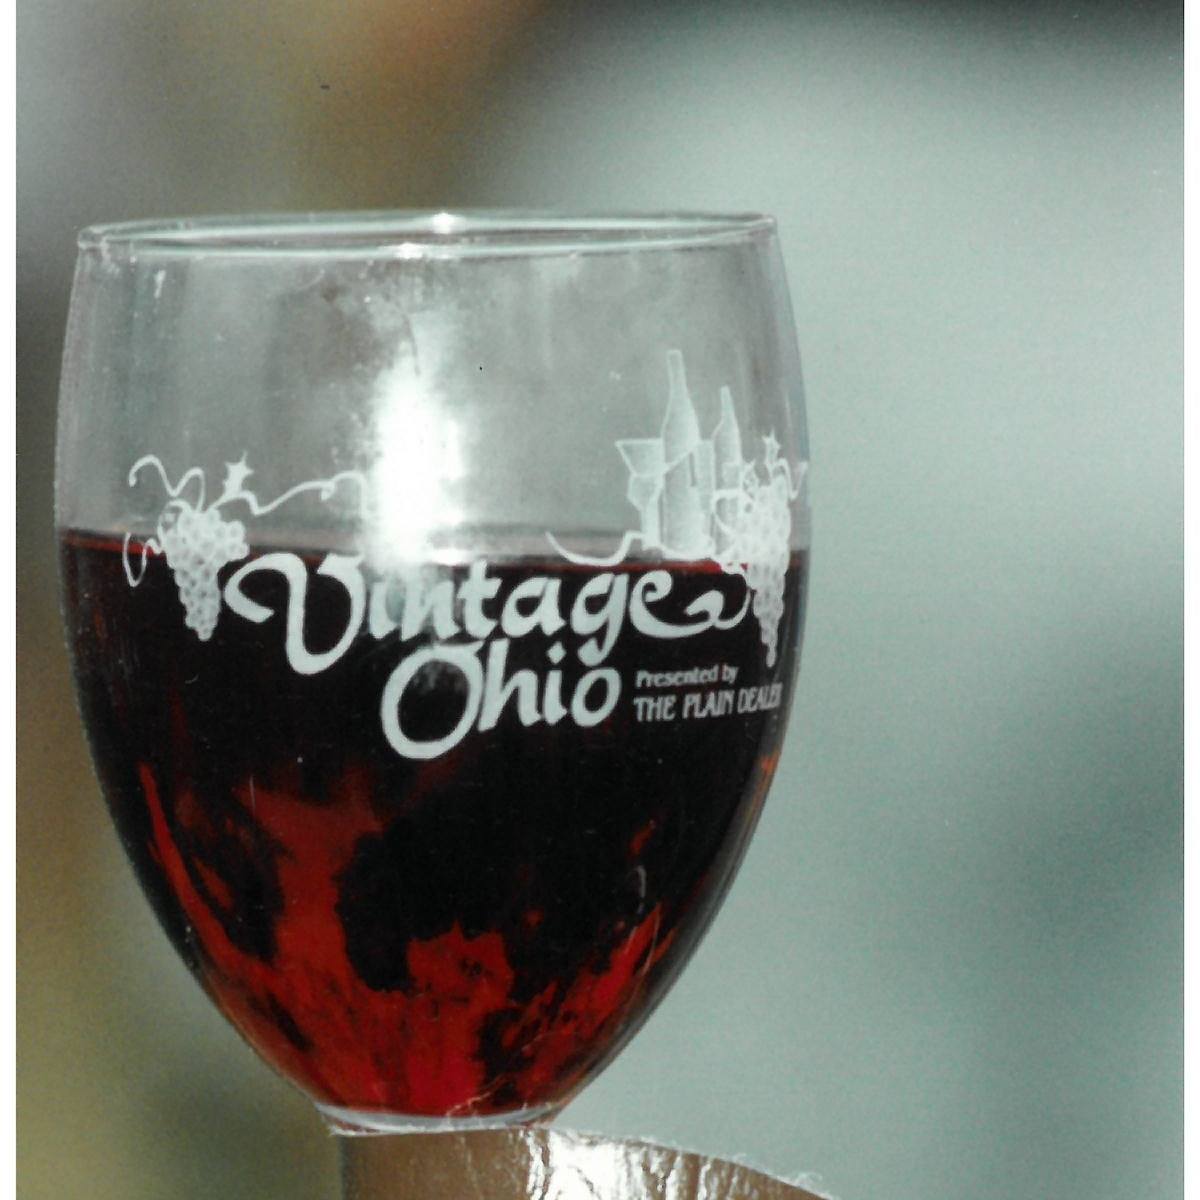 https://carpe-travel.com/wp-content/uploads/2021/06/Vintage-Ohio-Wine-Event.jpg